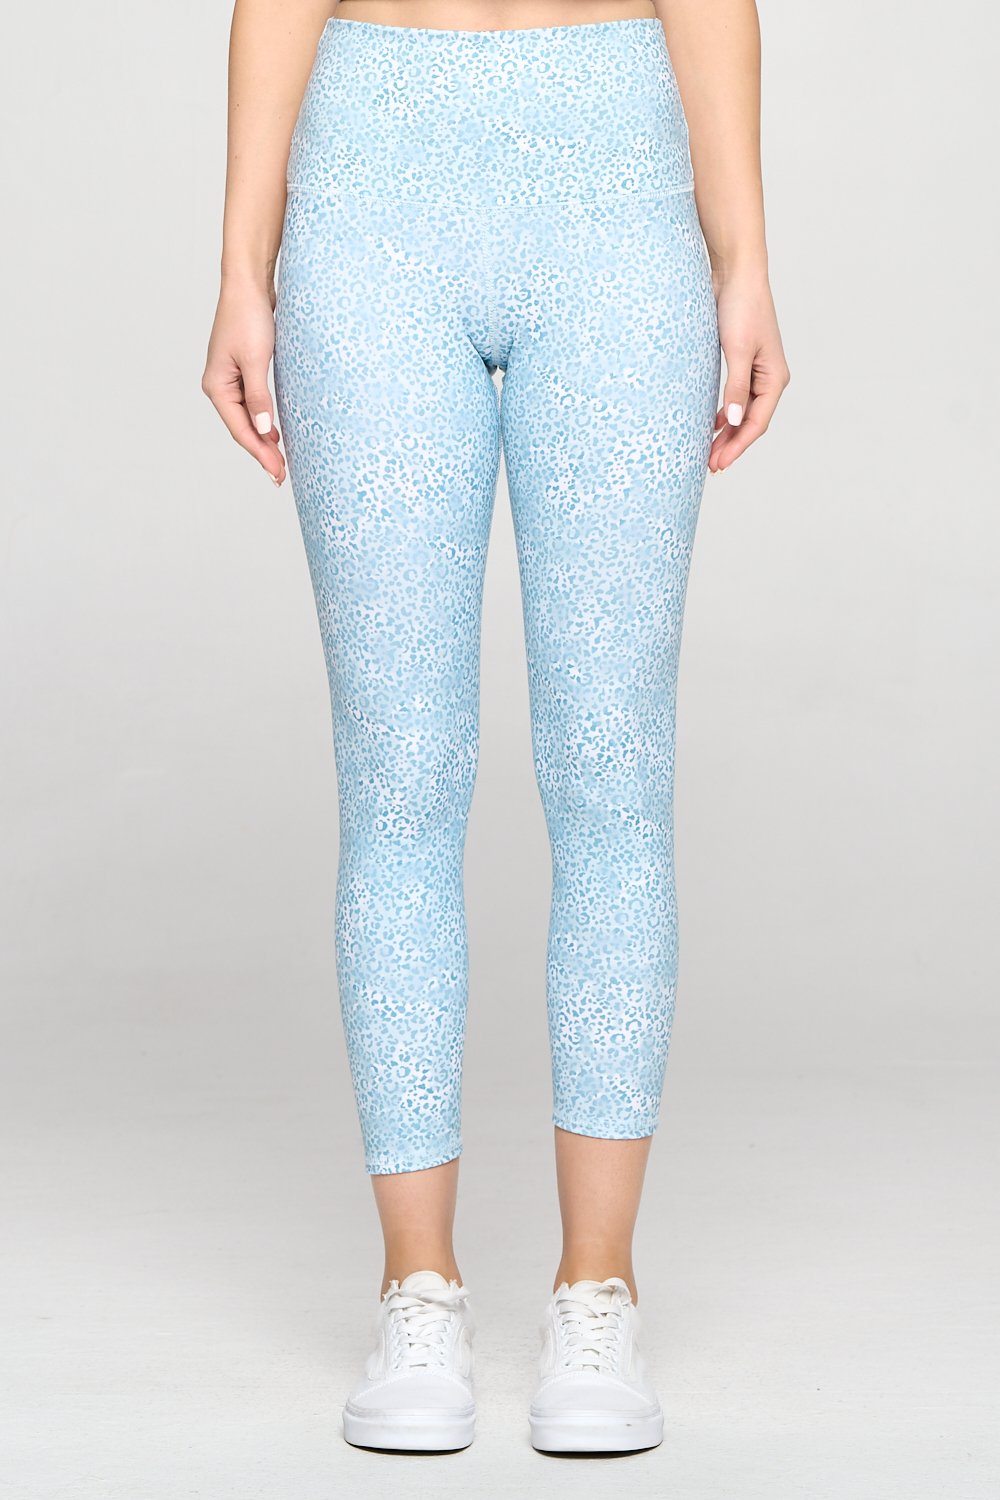 BCG Blue Grey Black Pants Legging Cheetah Print Size XL | eBay